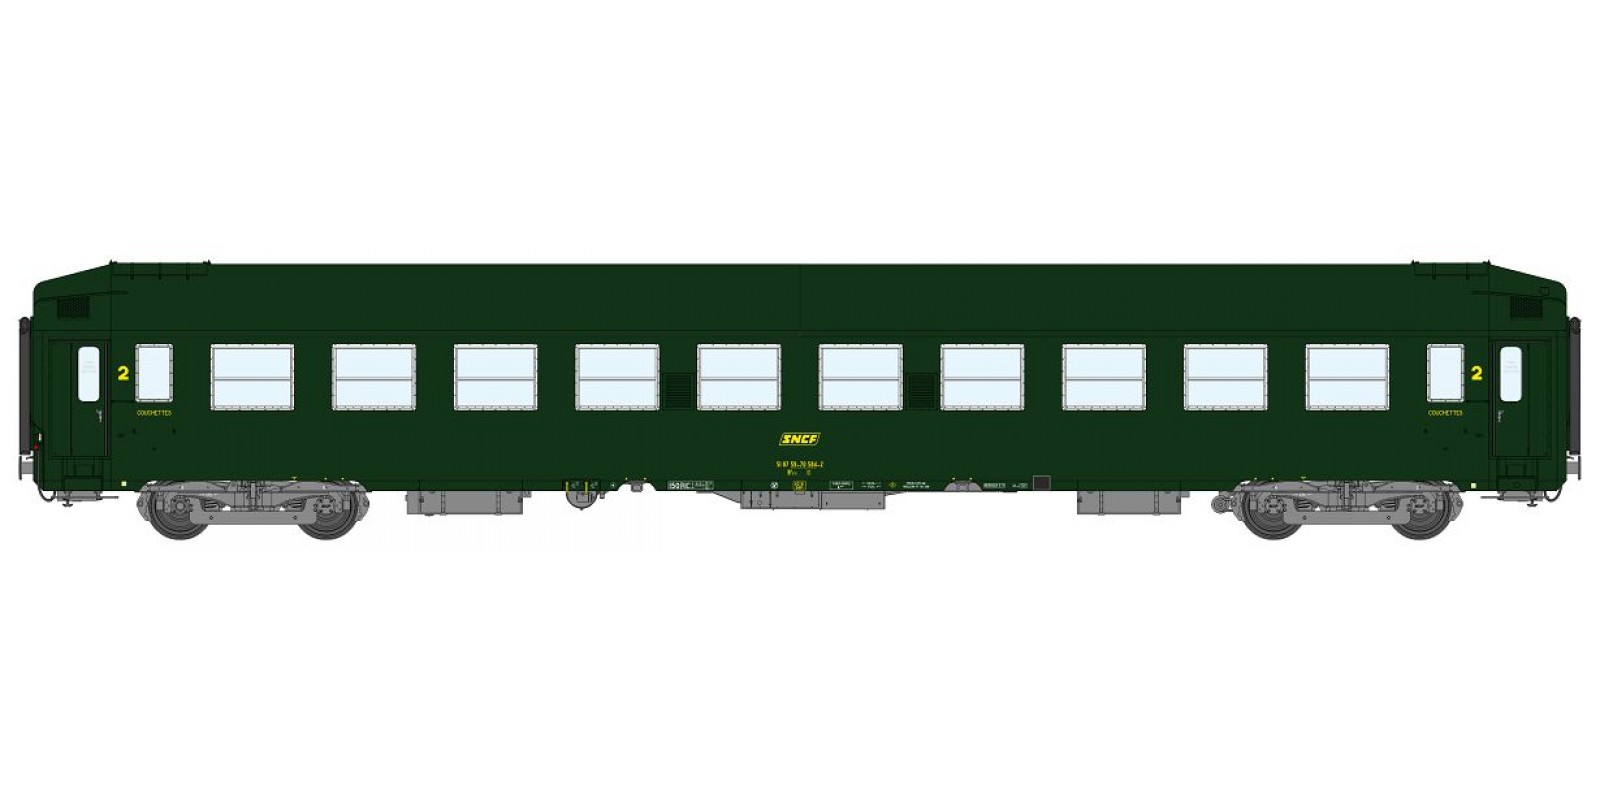 REVB225 UIC Sleeping Coache TH B9c9x, Green 301, Yellow Logo Era IV